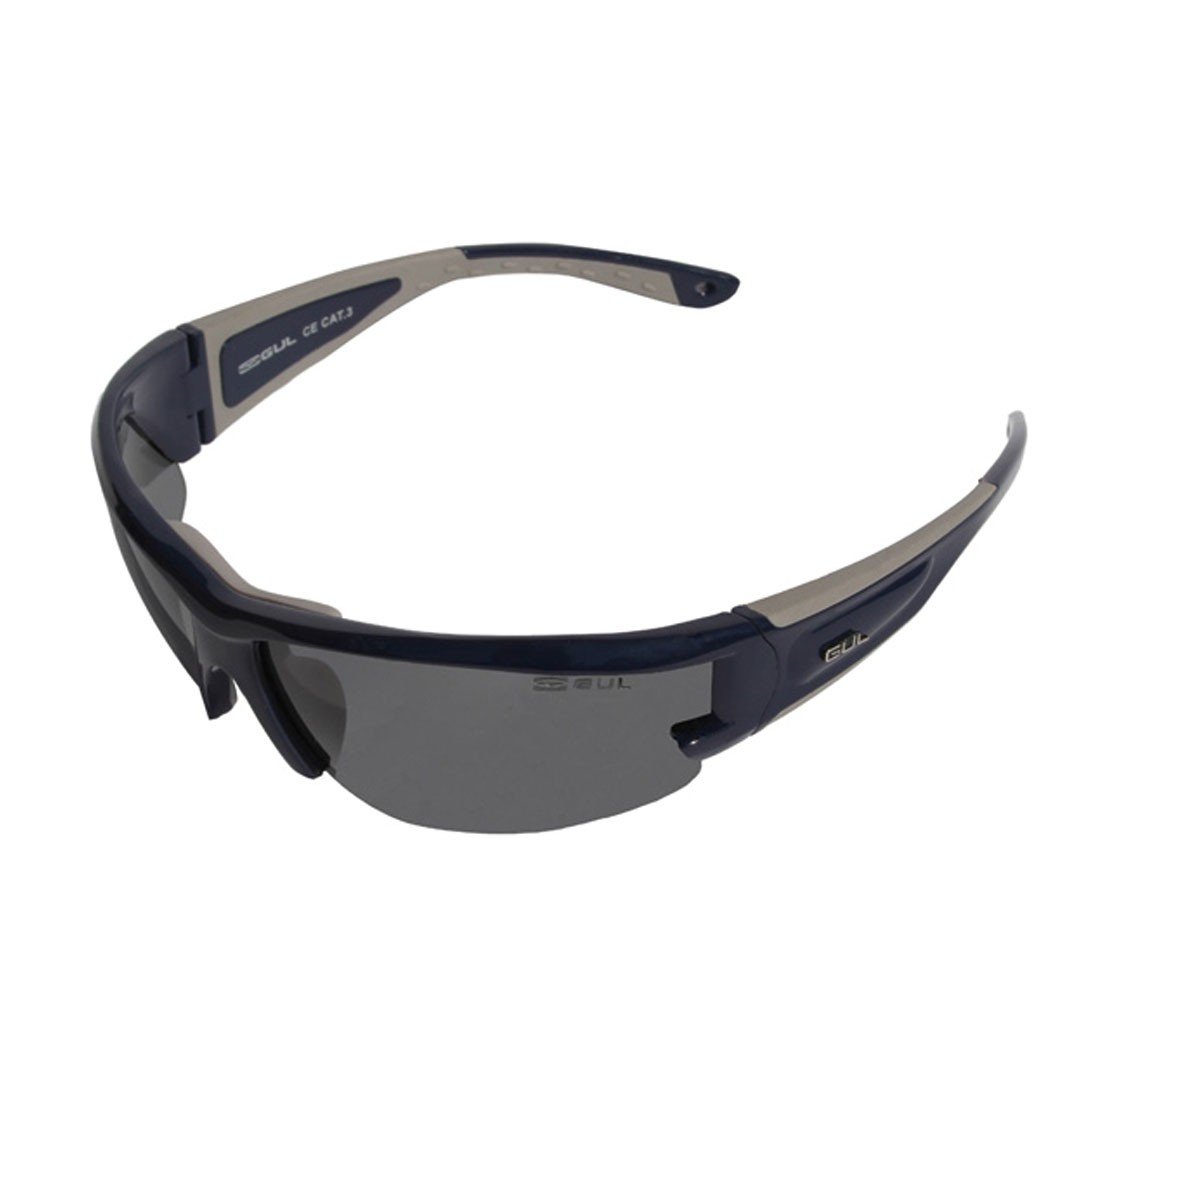 Gul Code Zero Race Floating Sunglasses   Sg0002-A3